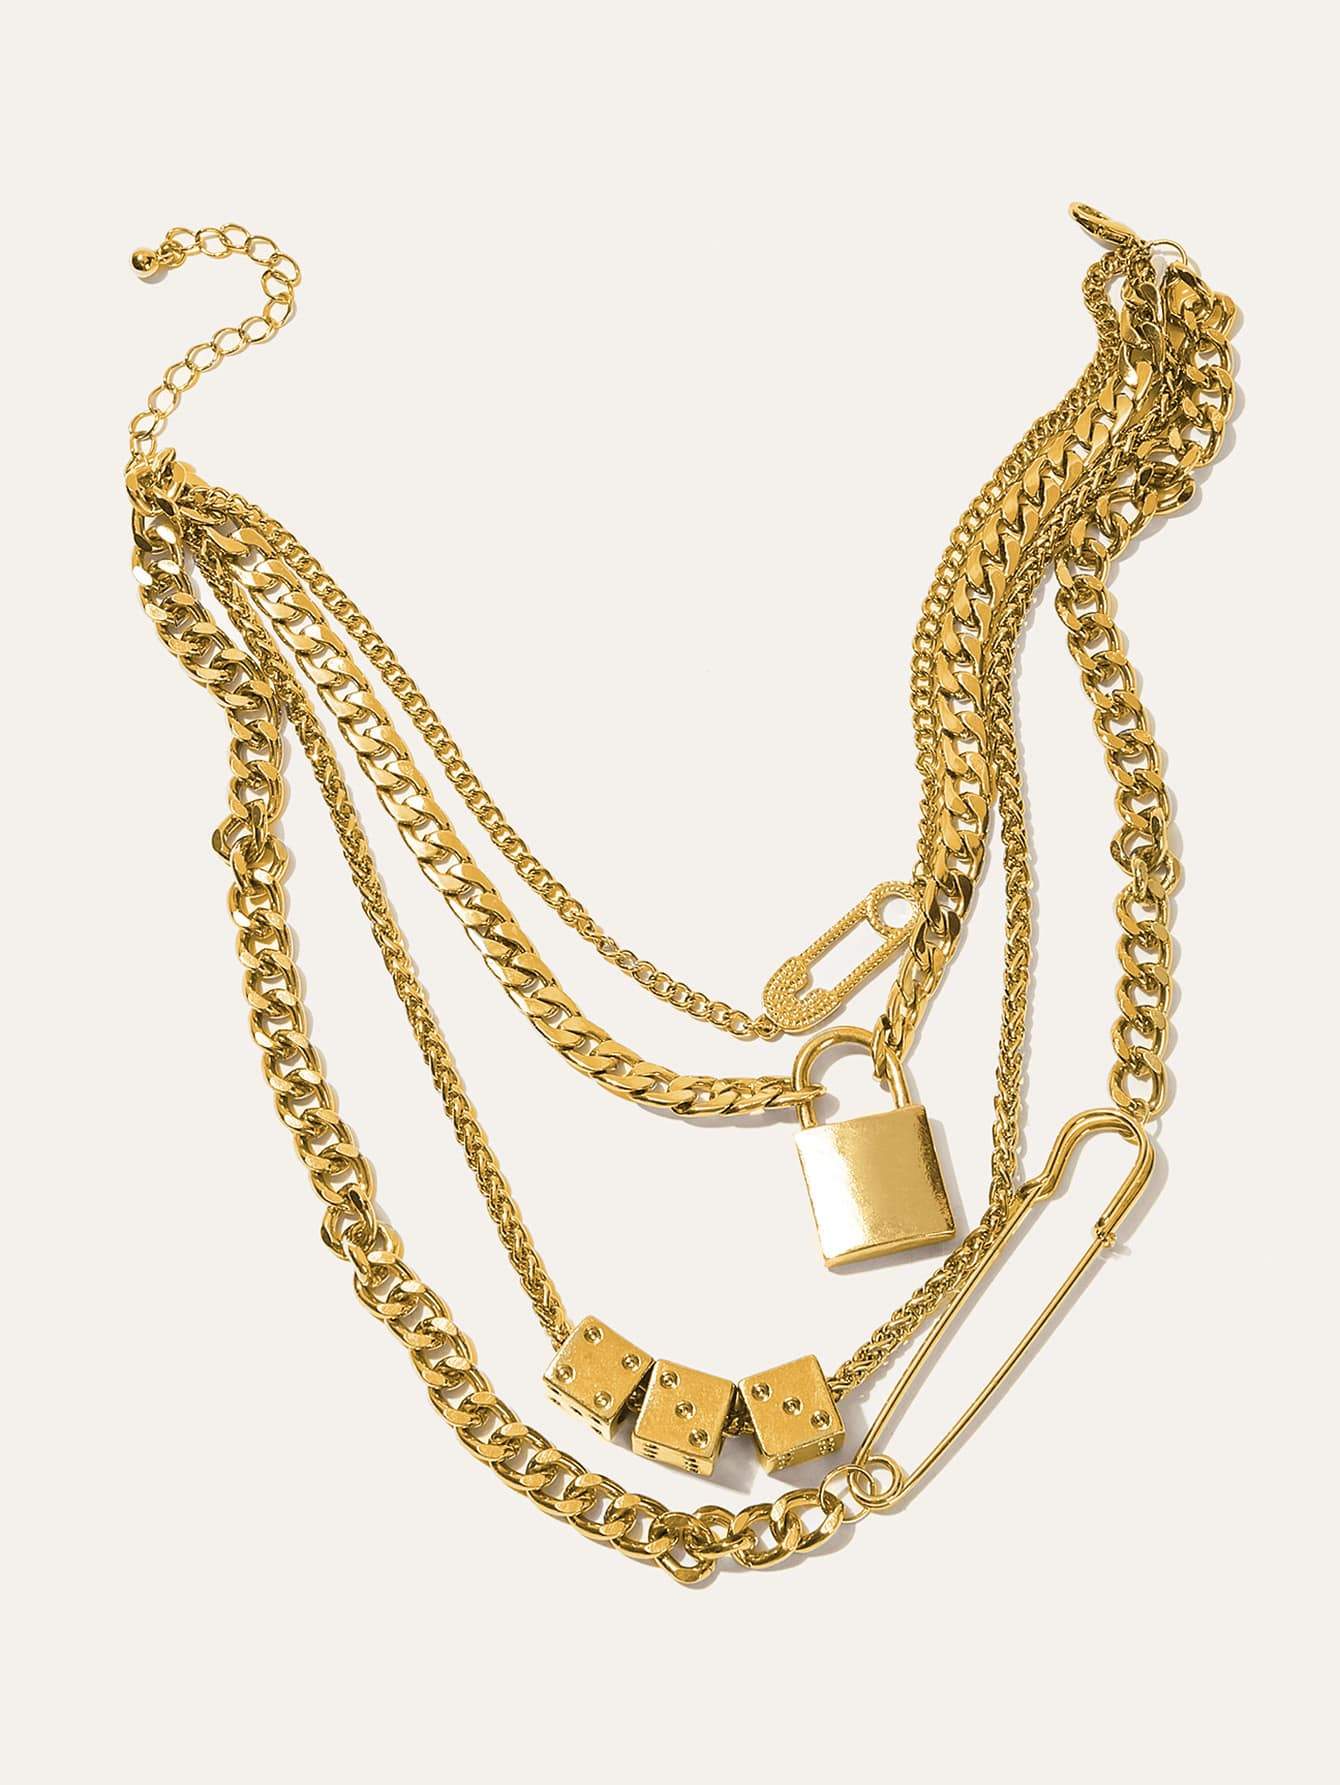 Lock & Paper Clip Decor Layered Necklace 1pc - shopnsave.pk